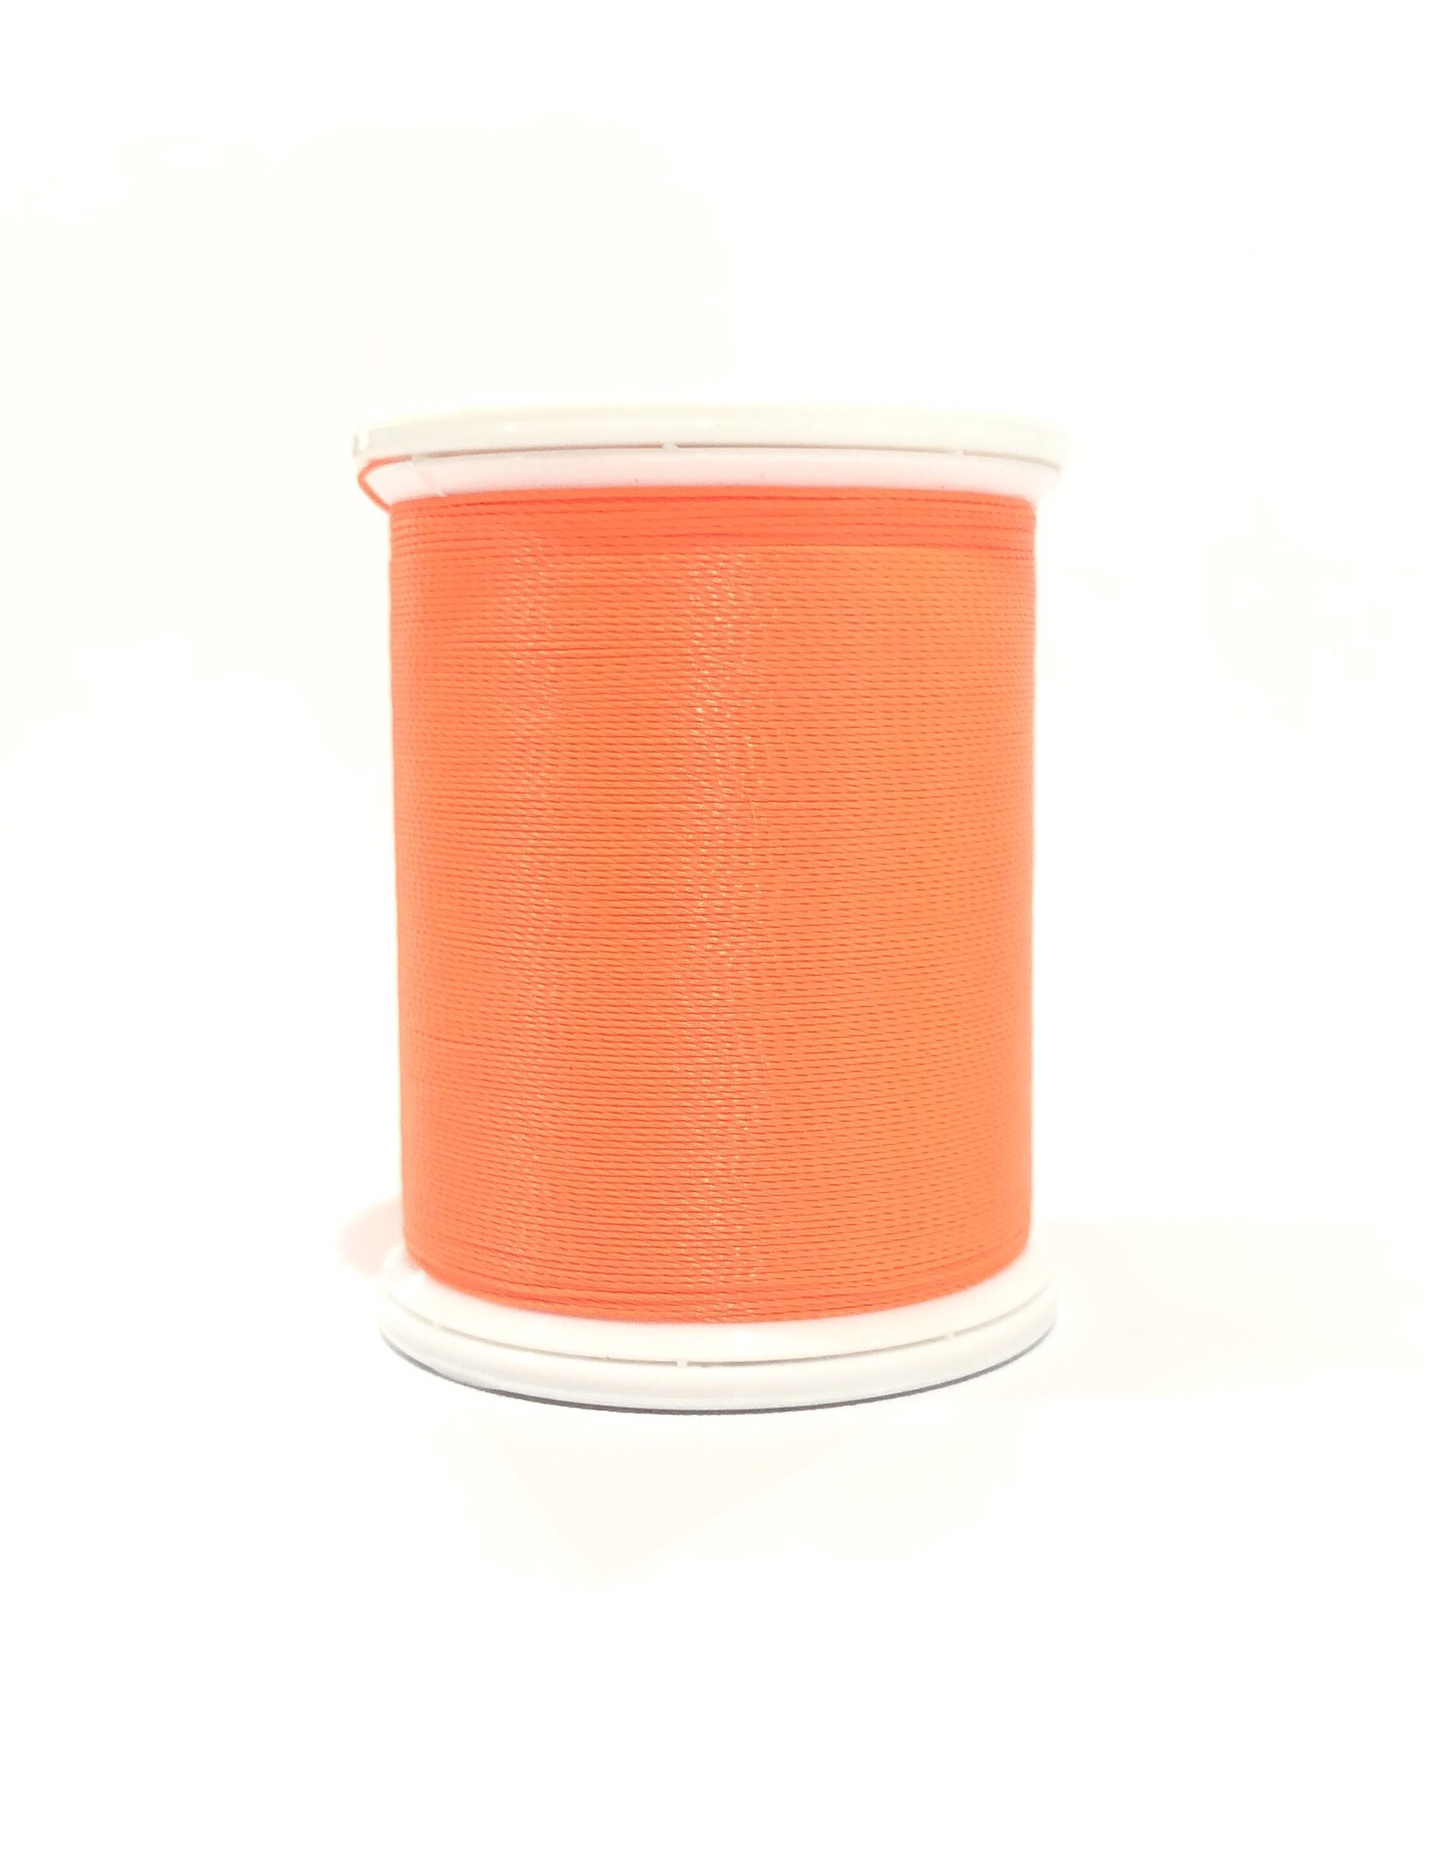 Fuji D 501 Neon Orange